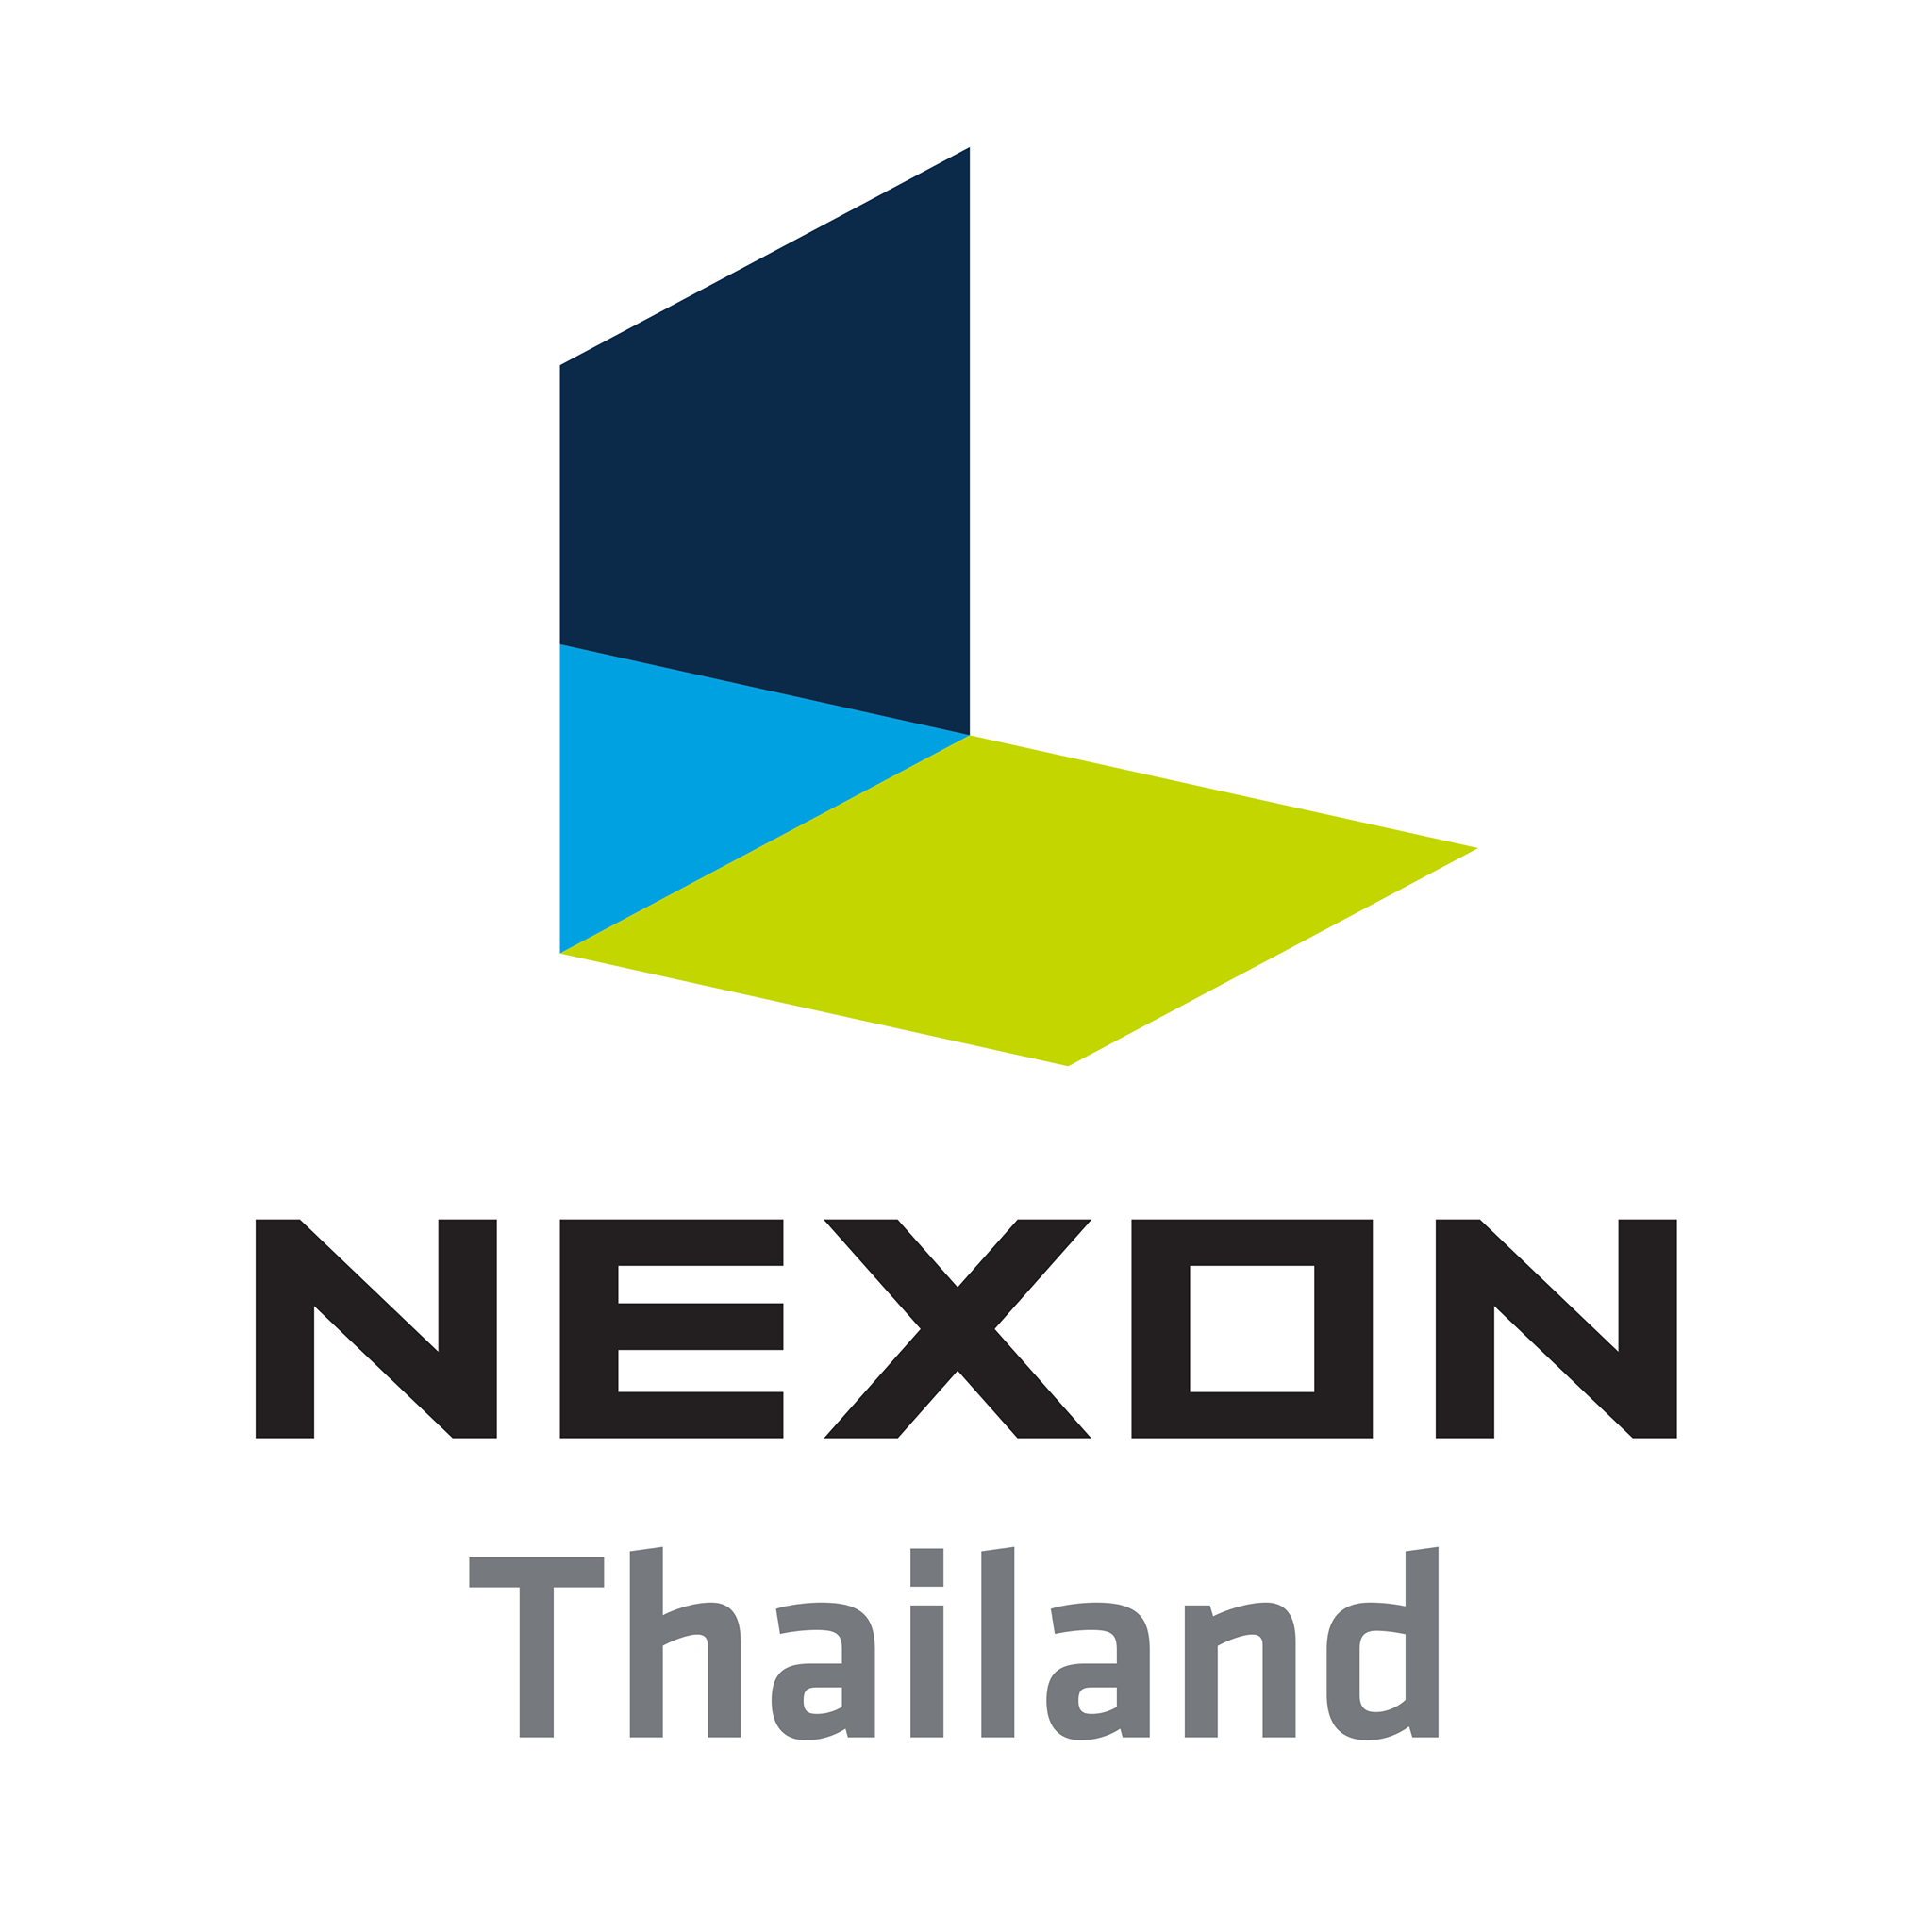 Nexon Thailand